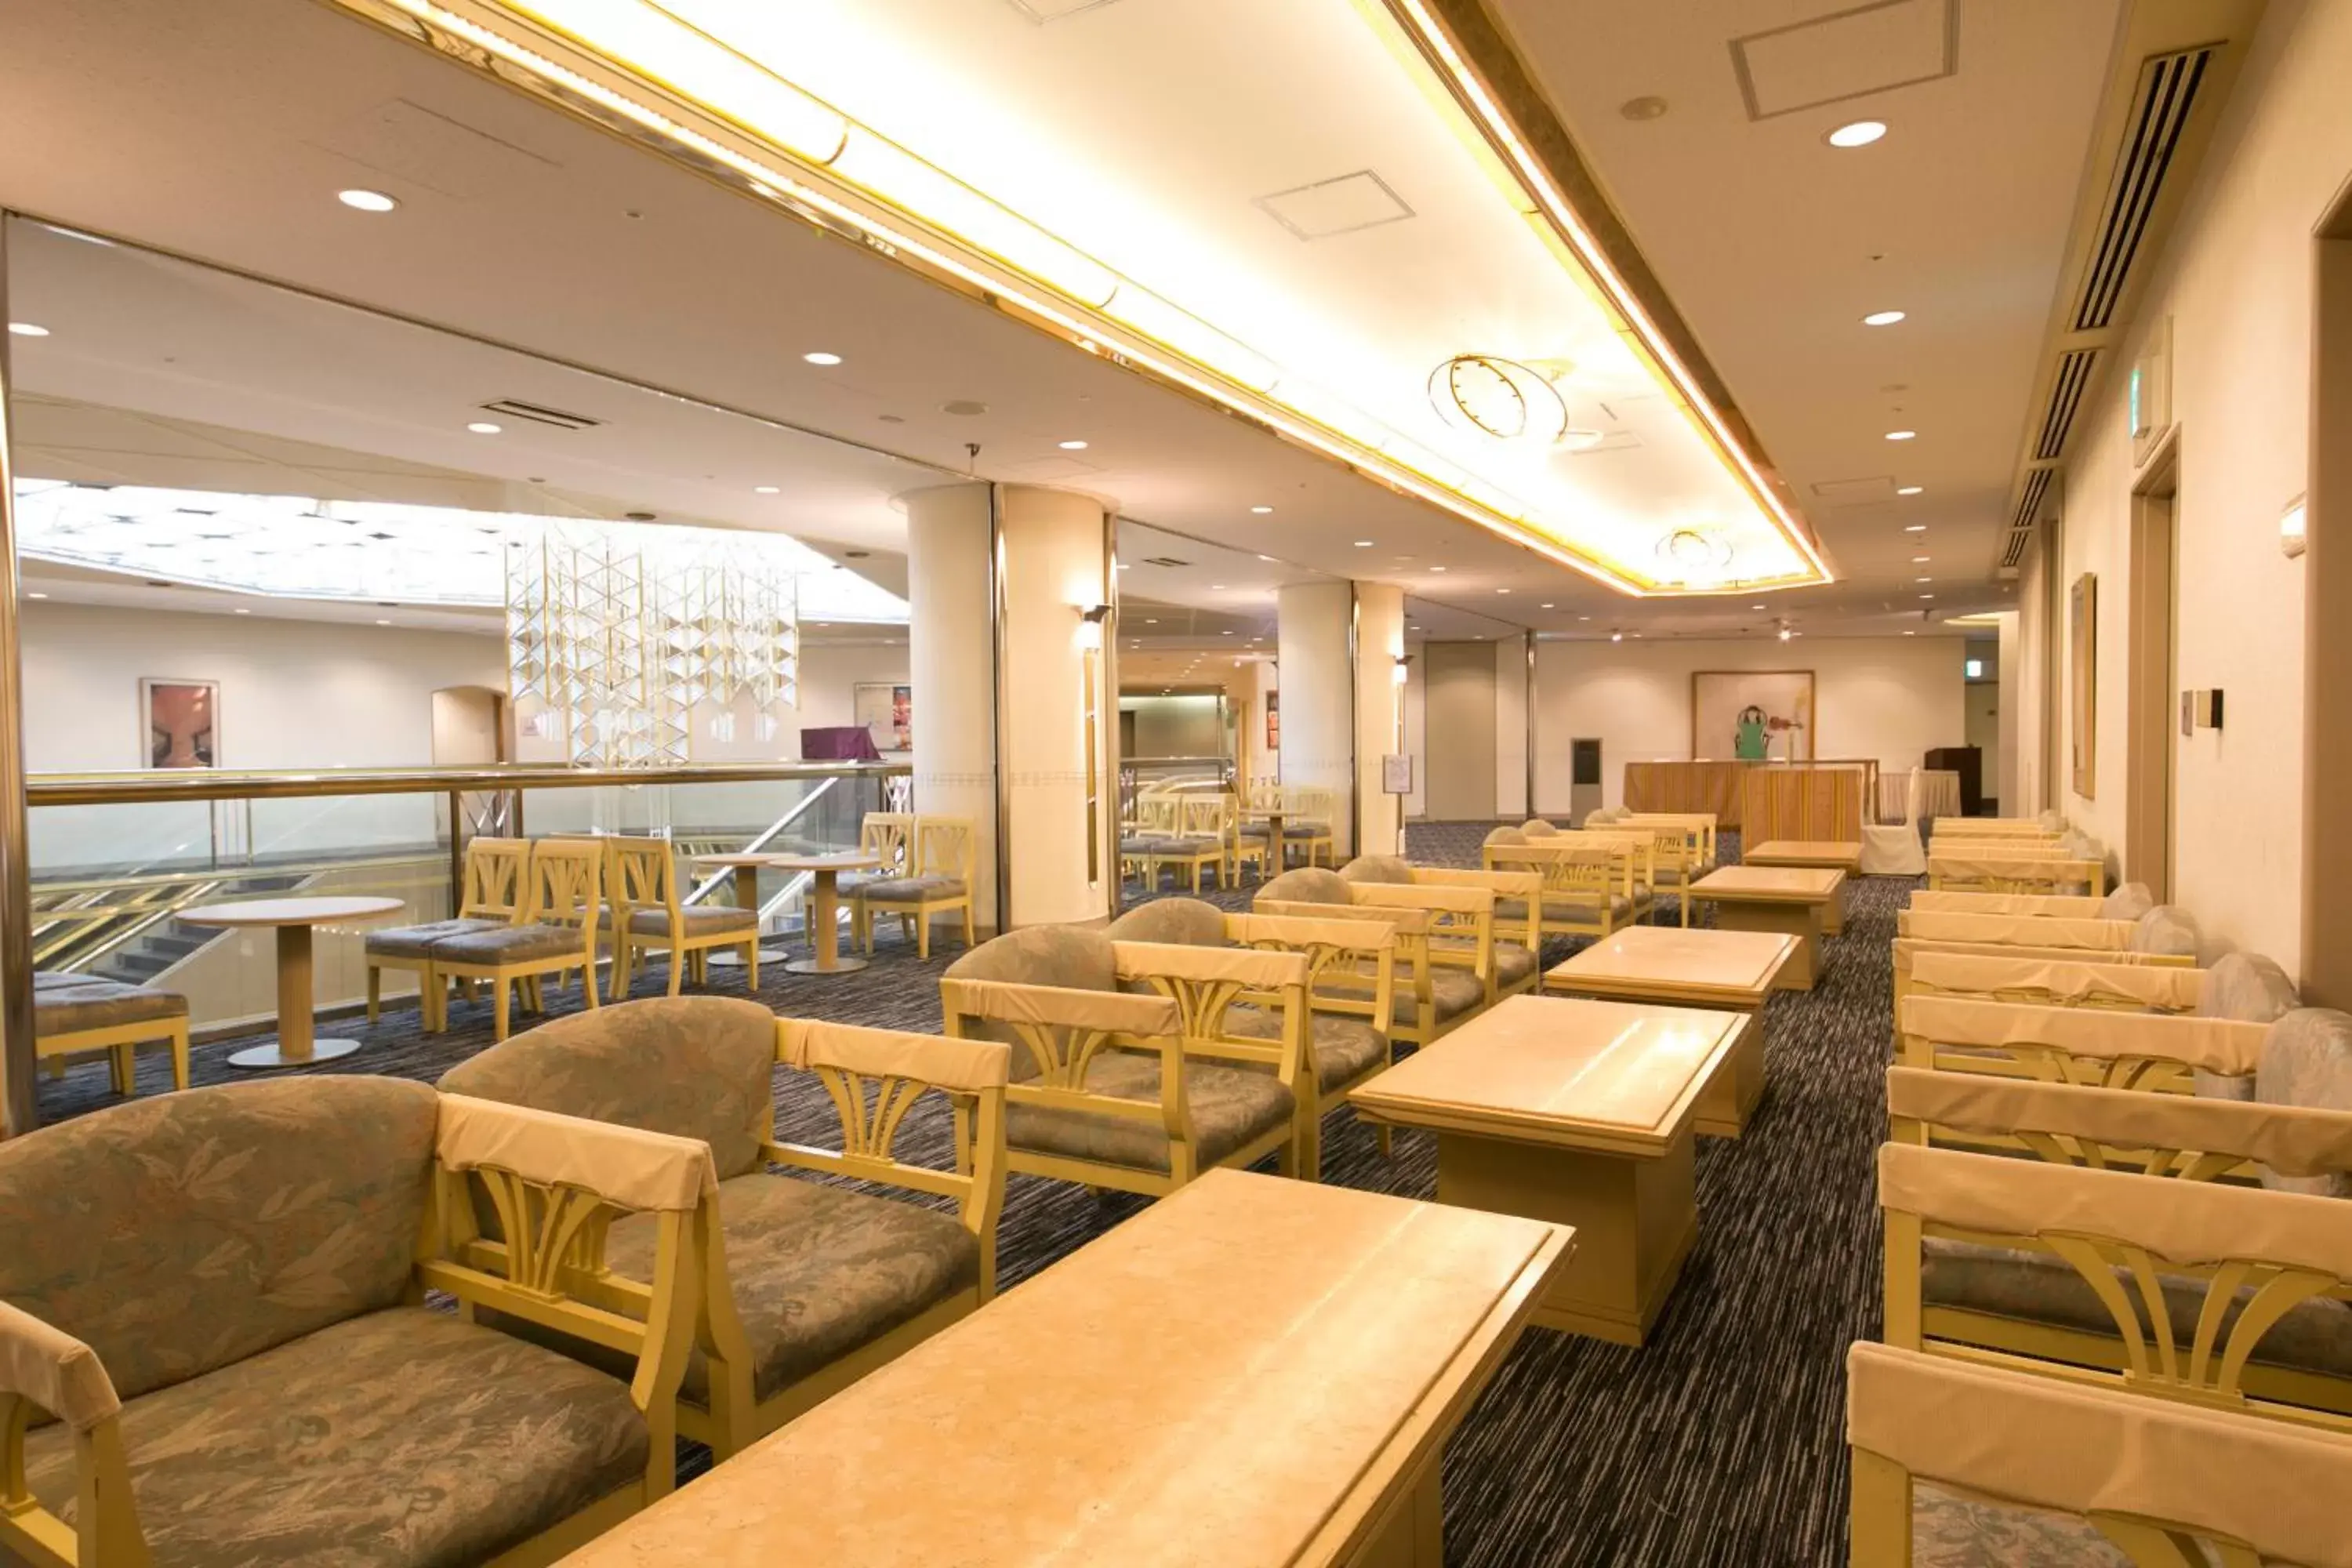 Lobby or reception in Shin Osaka Washington Hotel Plaza